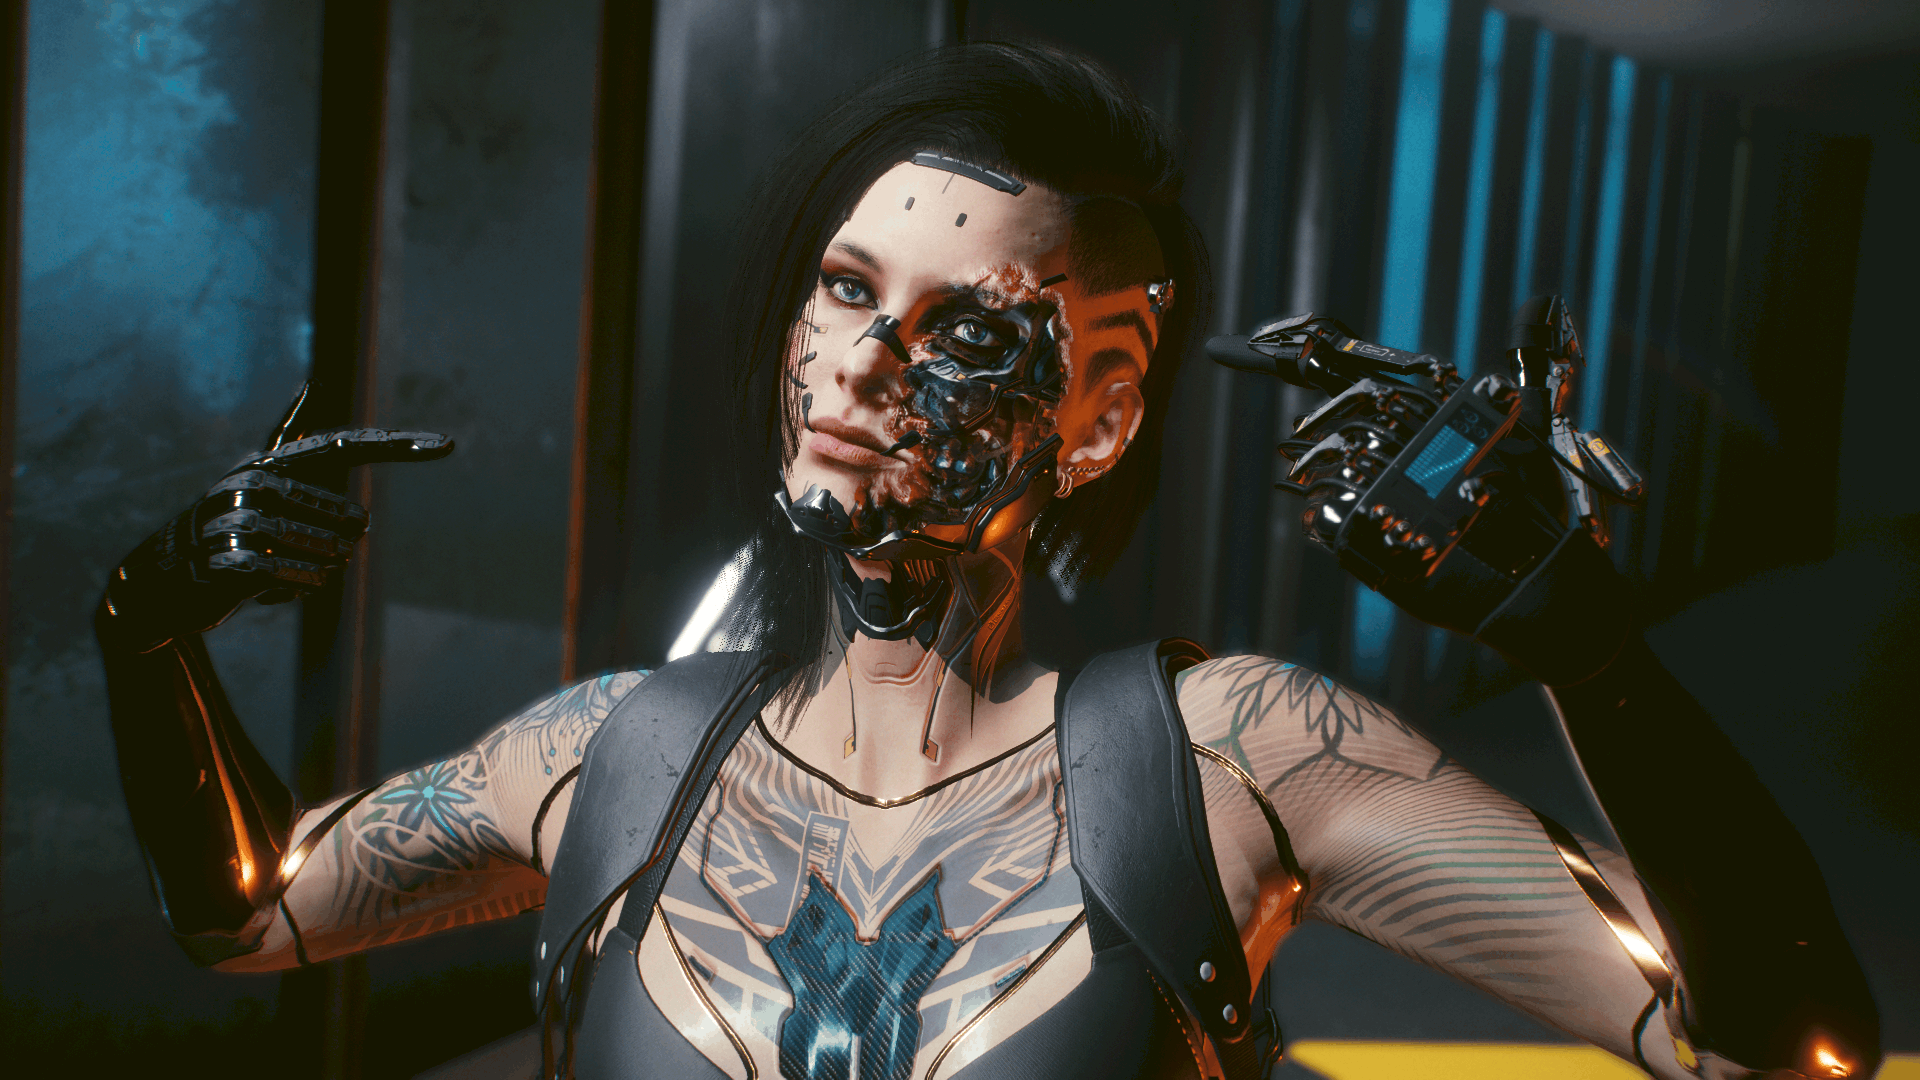 Damage face for V - Cyberpunk 2077 Mod